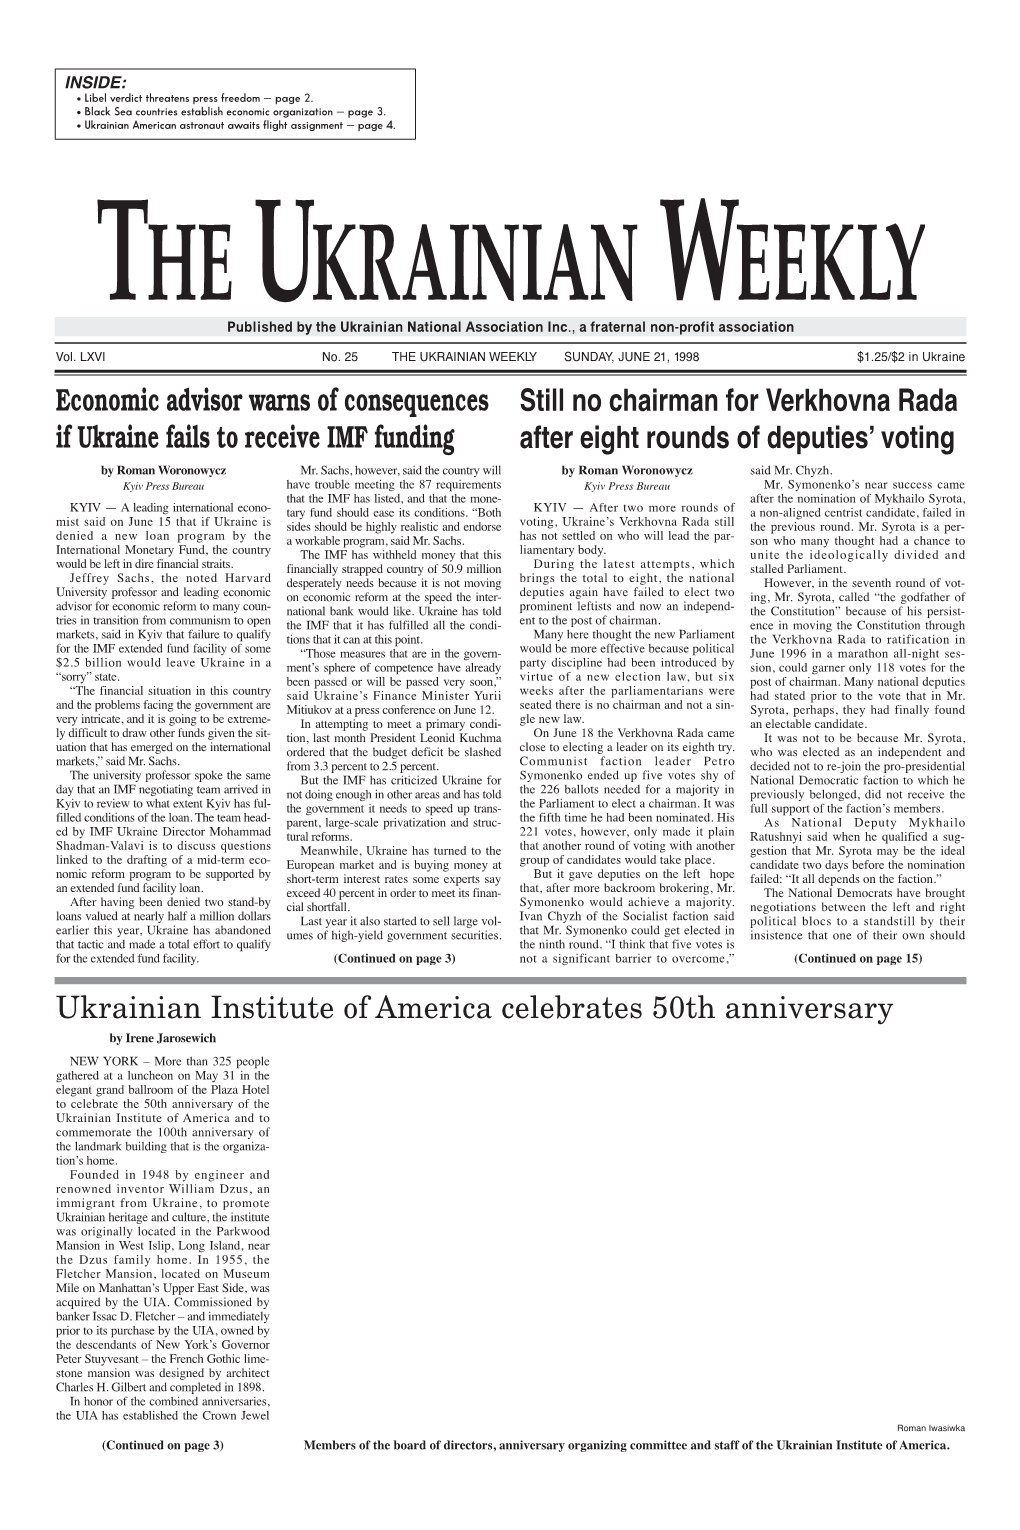 The Ukrainian Weekly 1998, No.25